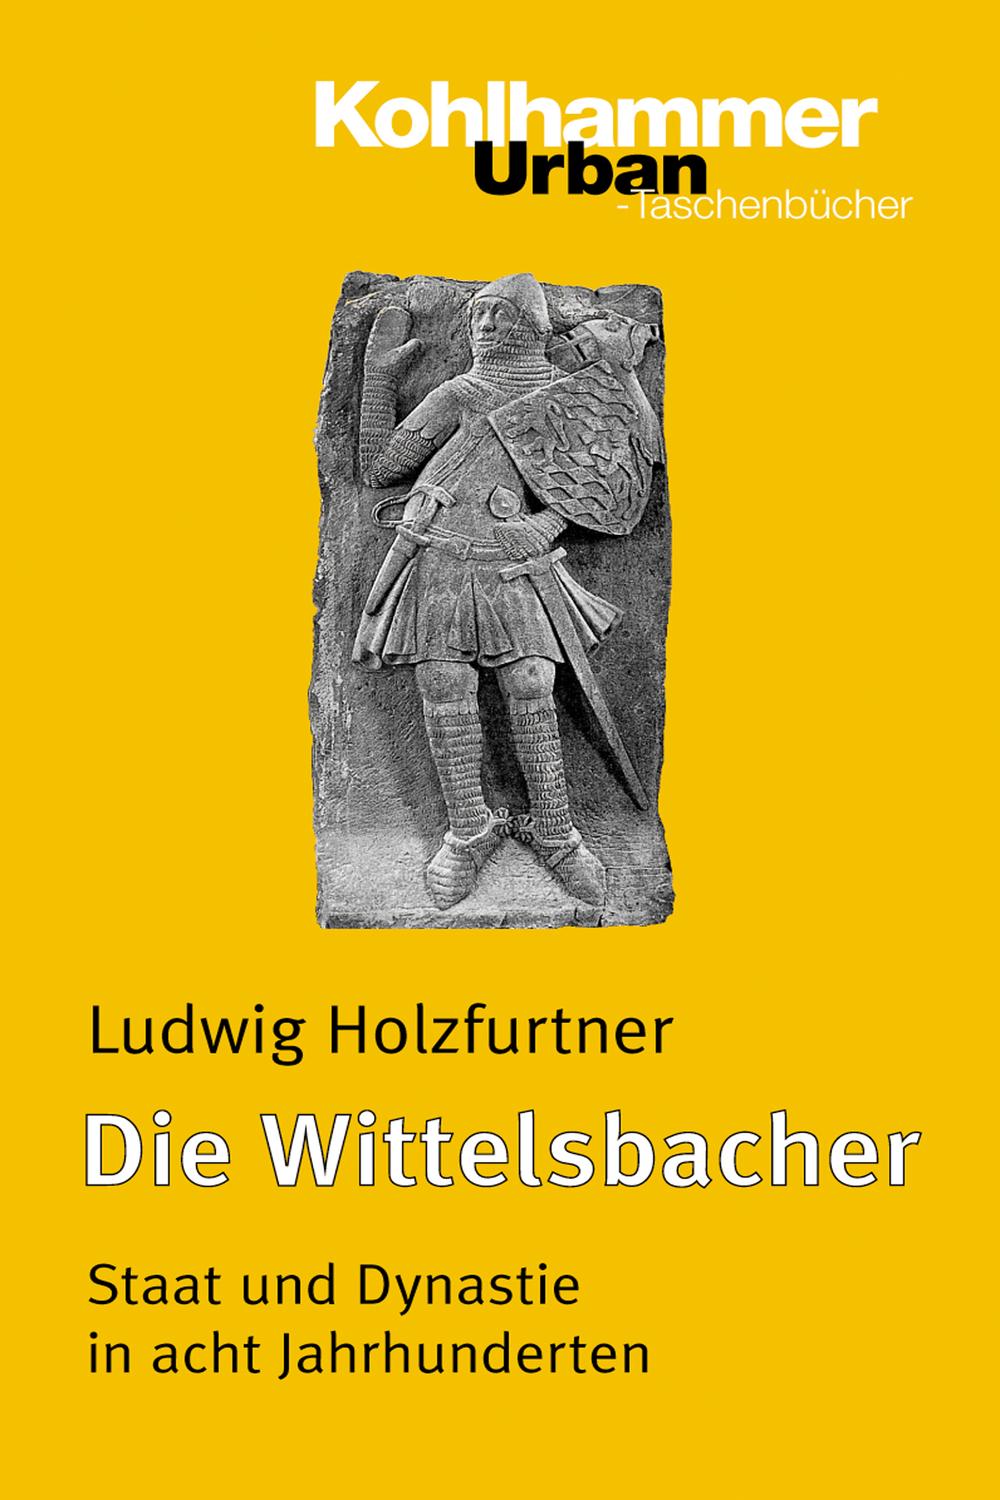 Die Wittelsbacher - Ludwig Holzfurtner